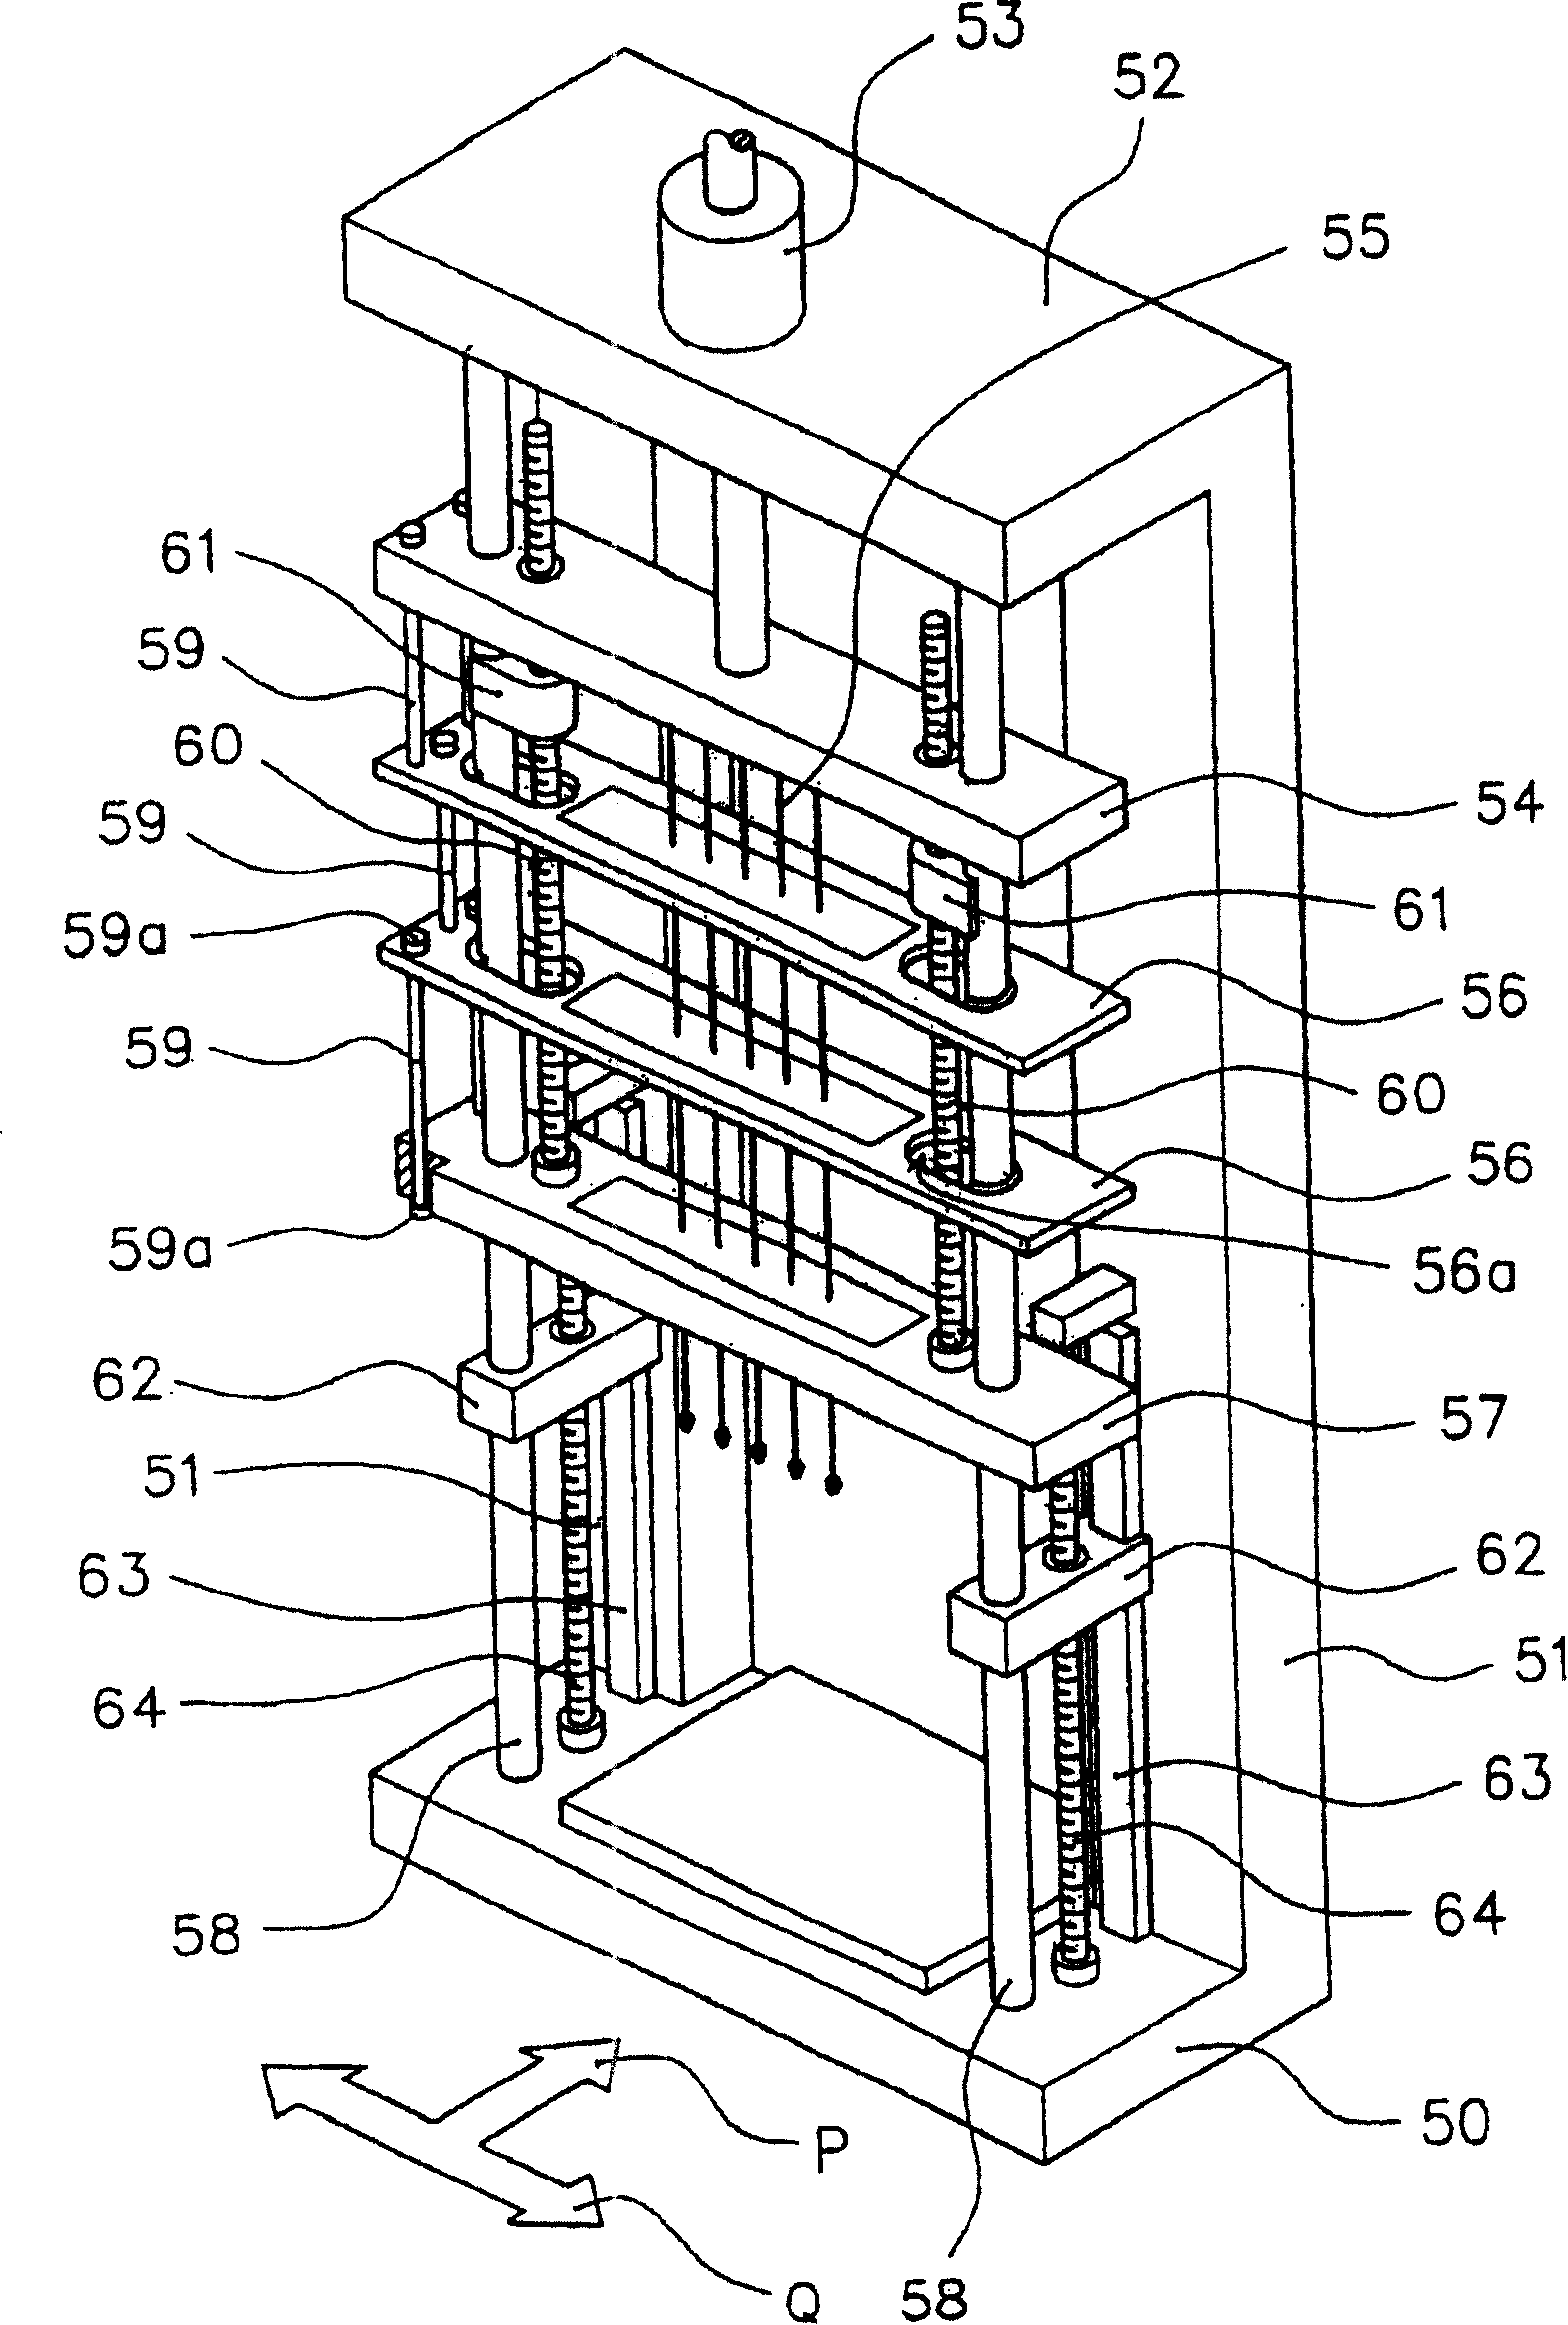 Apparatus for enlarging tube used in heat exchanger